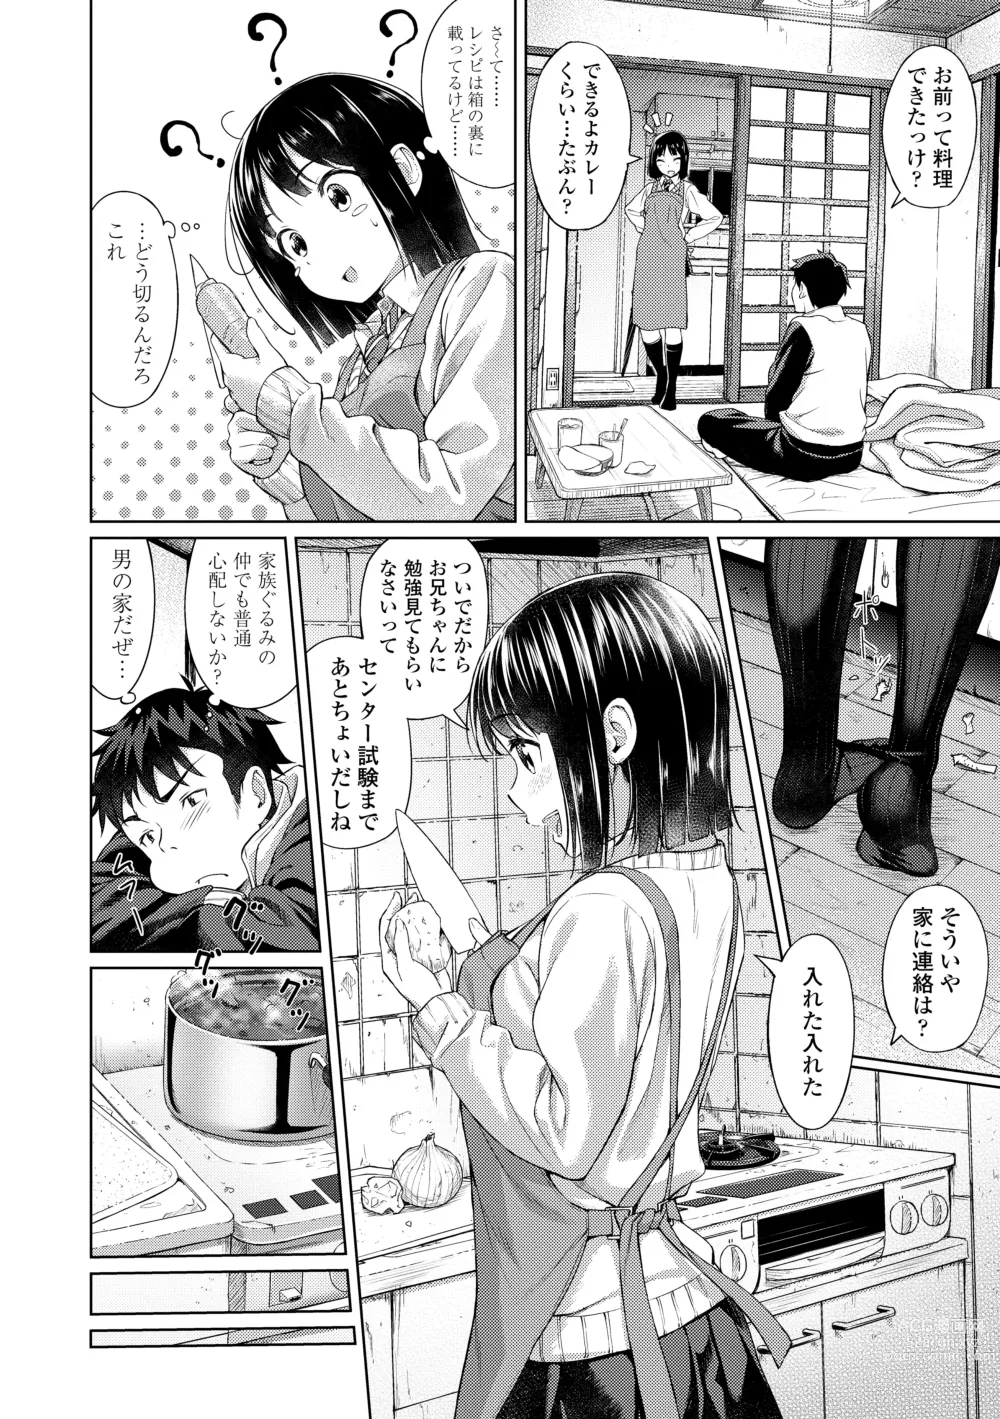 Page 6 of manga Aolove